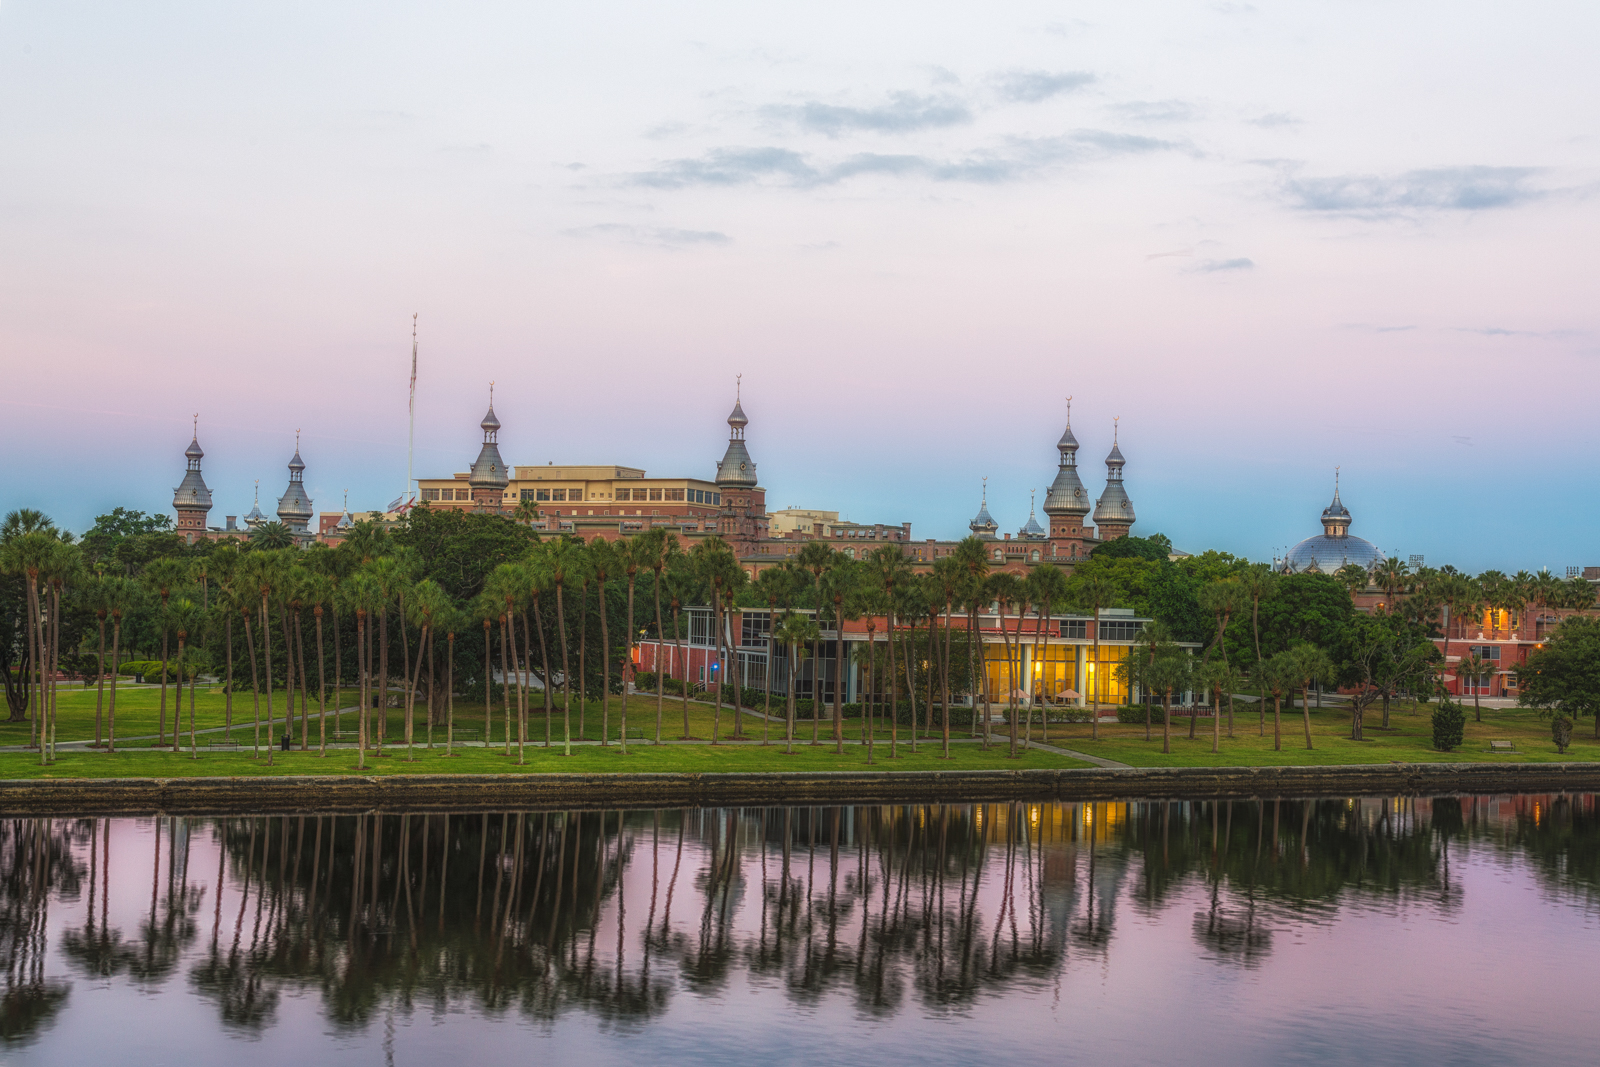 University of Tampa Reflection, Florida